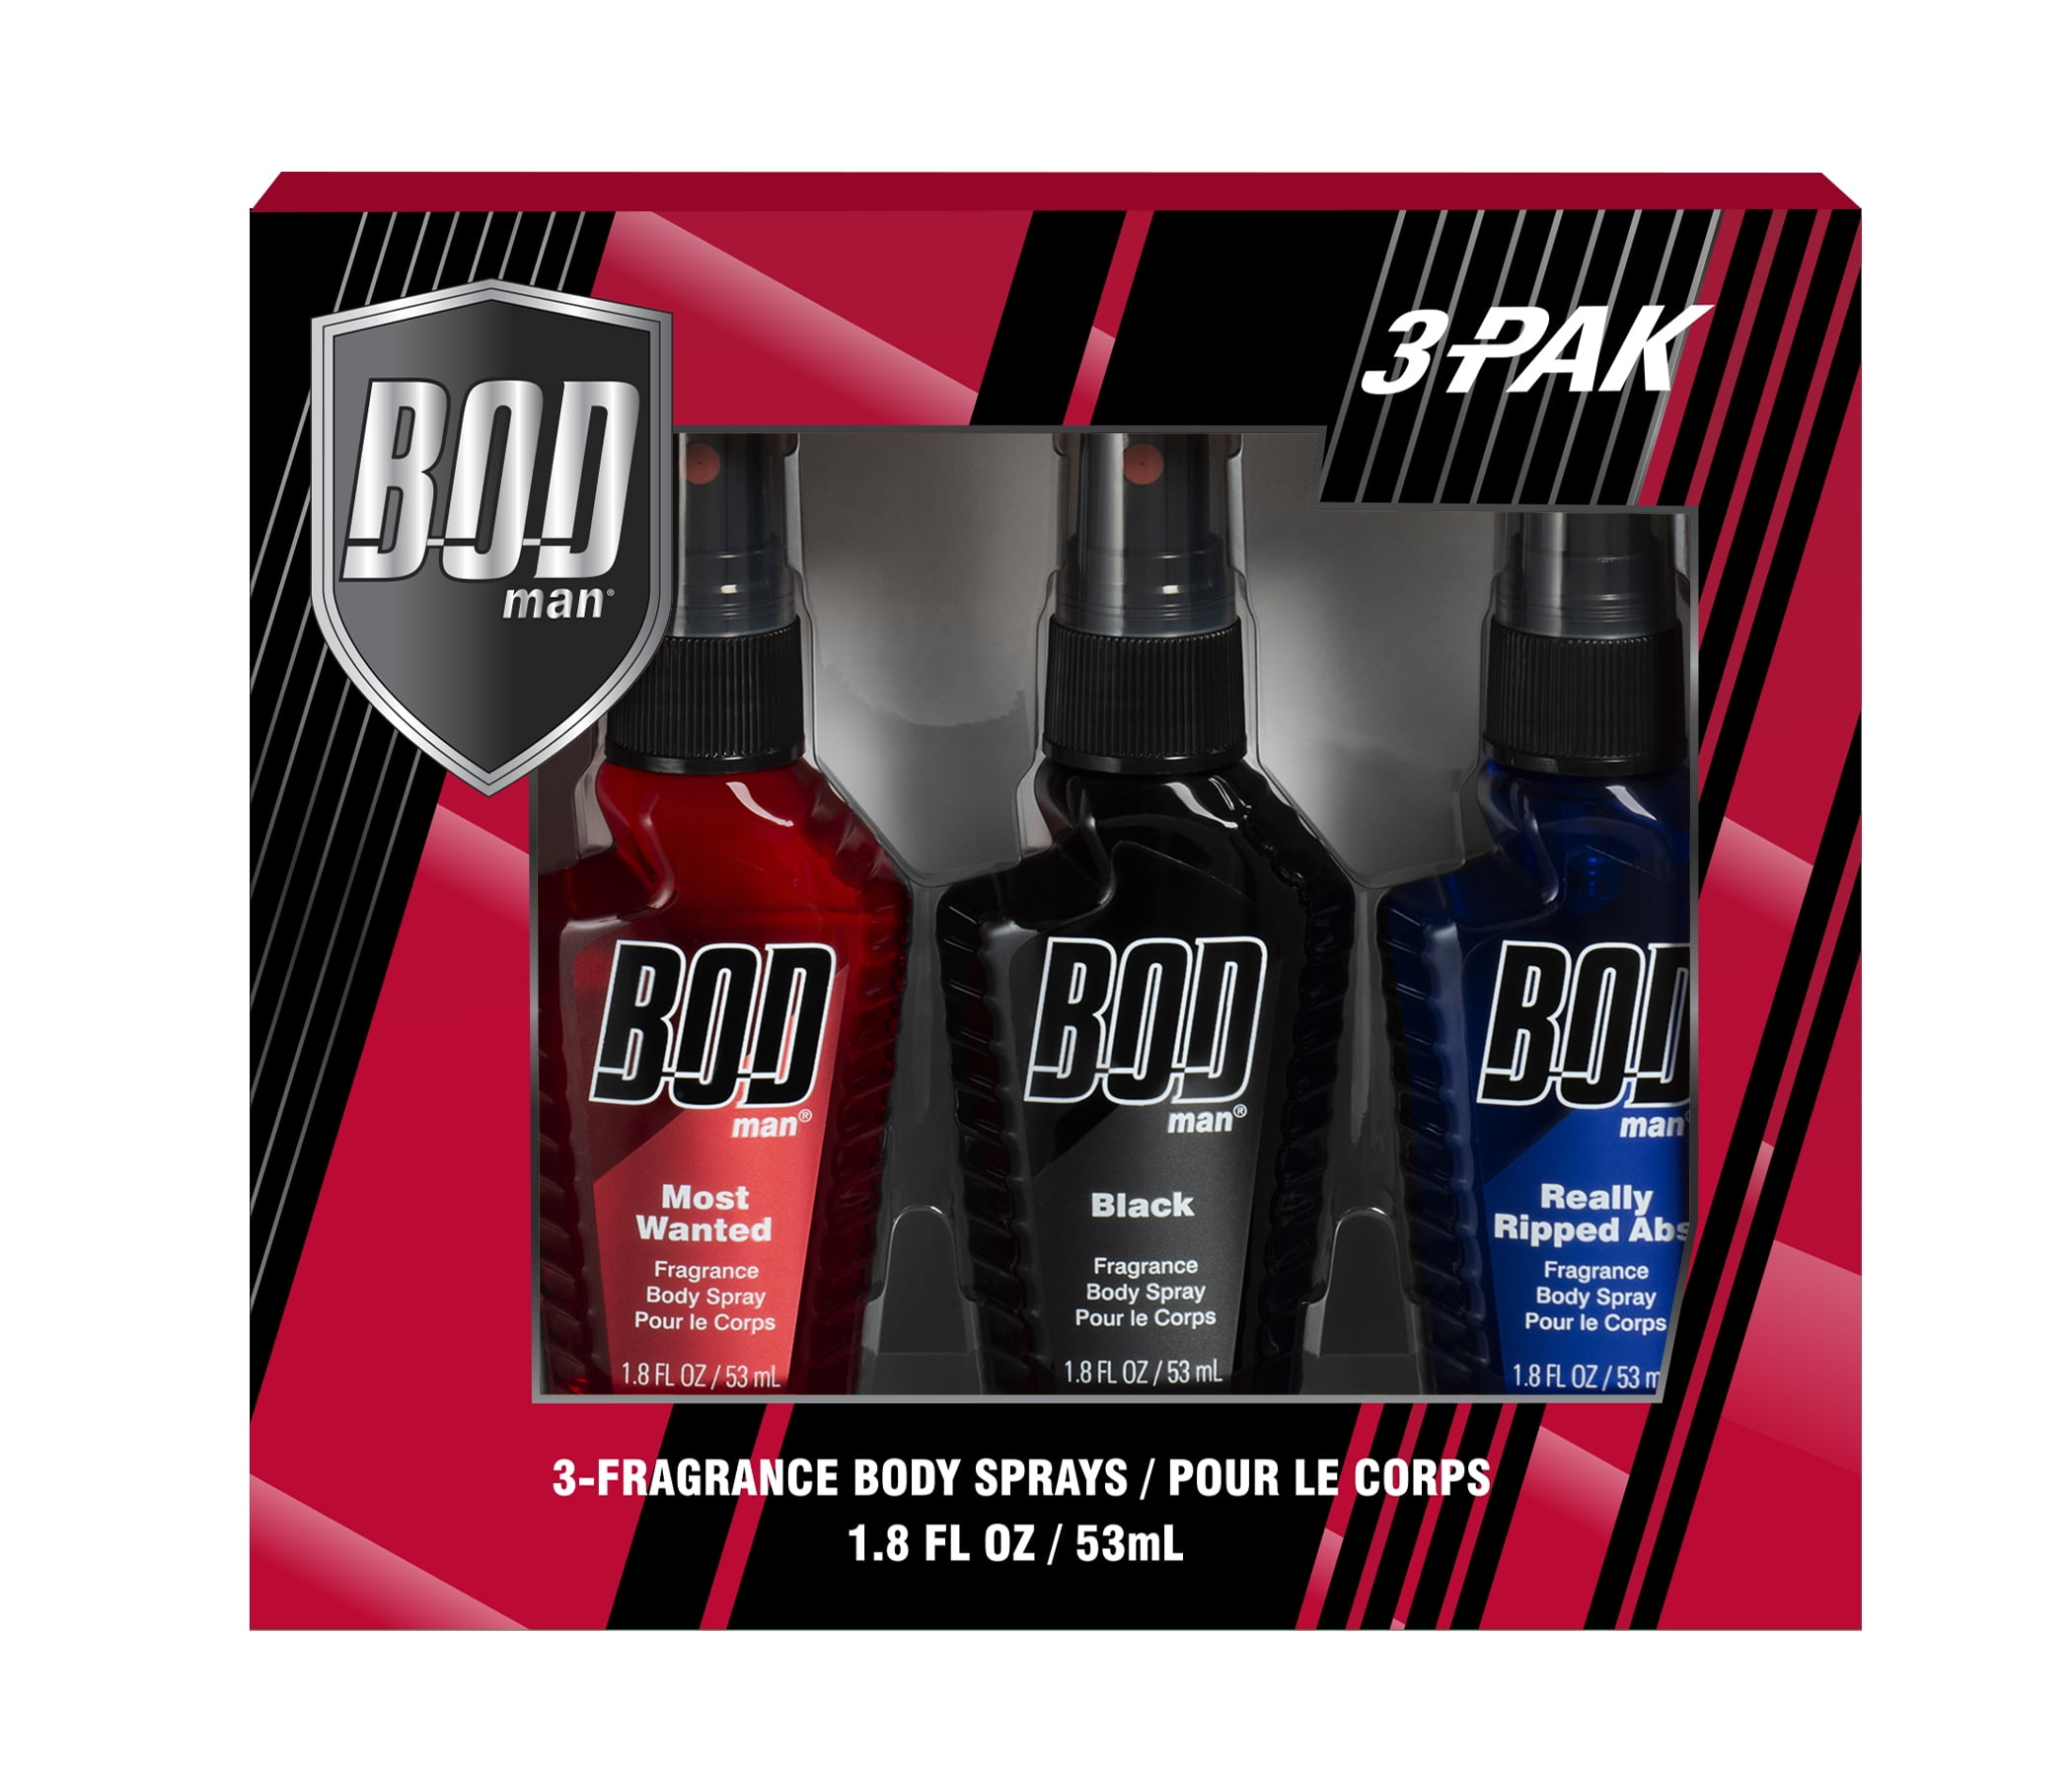 BOD Man Fragrance Body Spray Gift Set, 3 pieces - Walmart.com